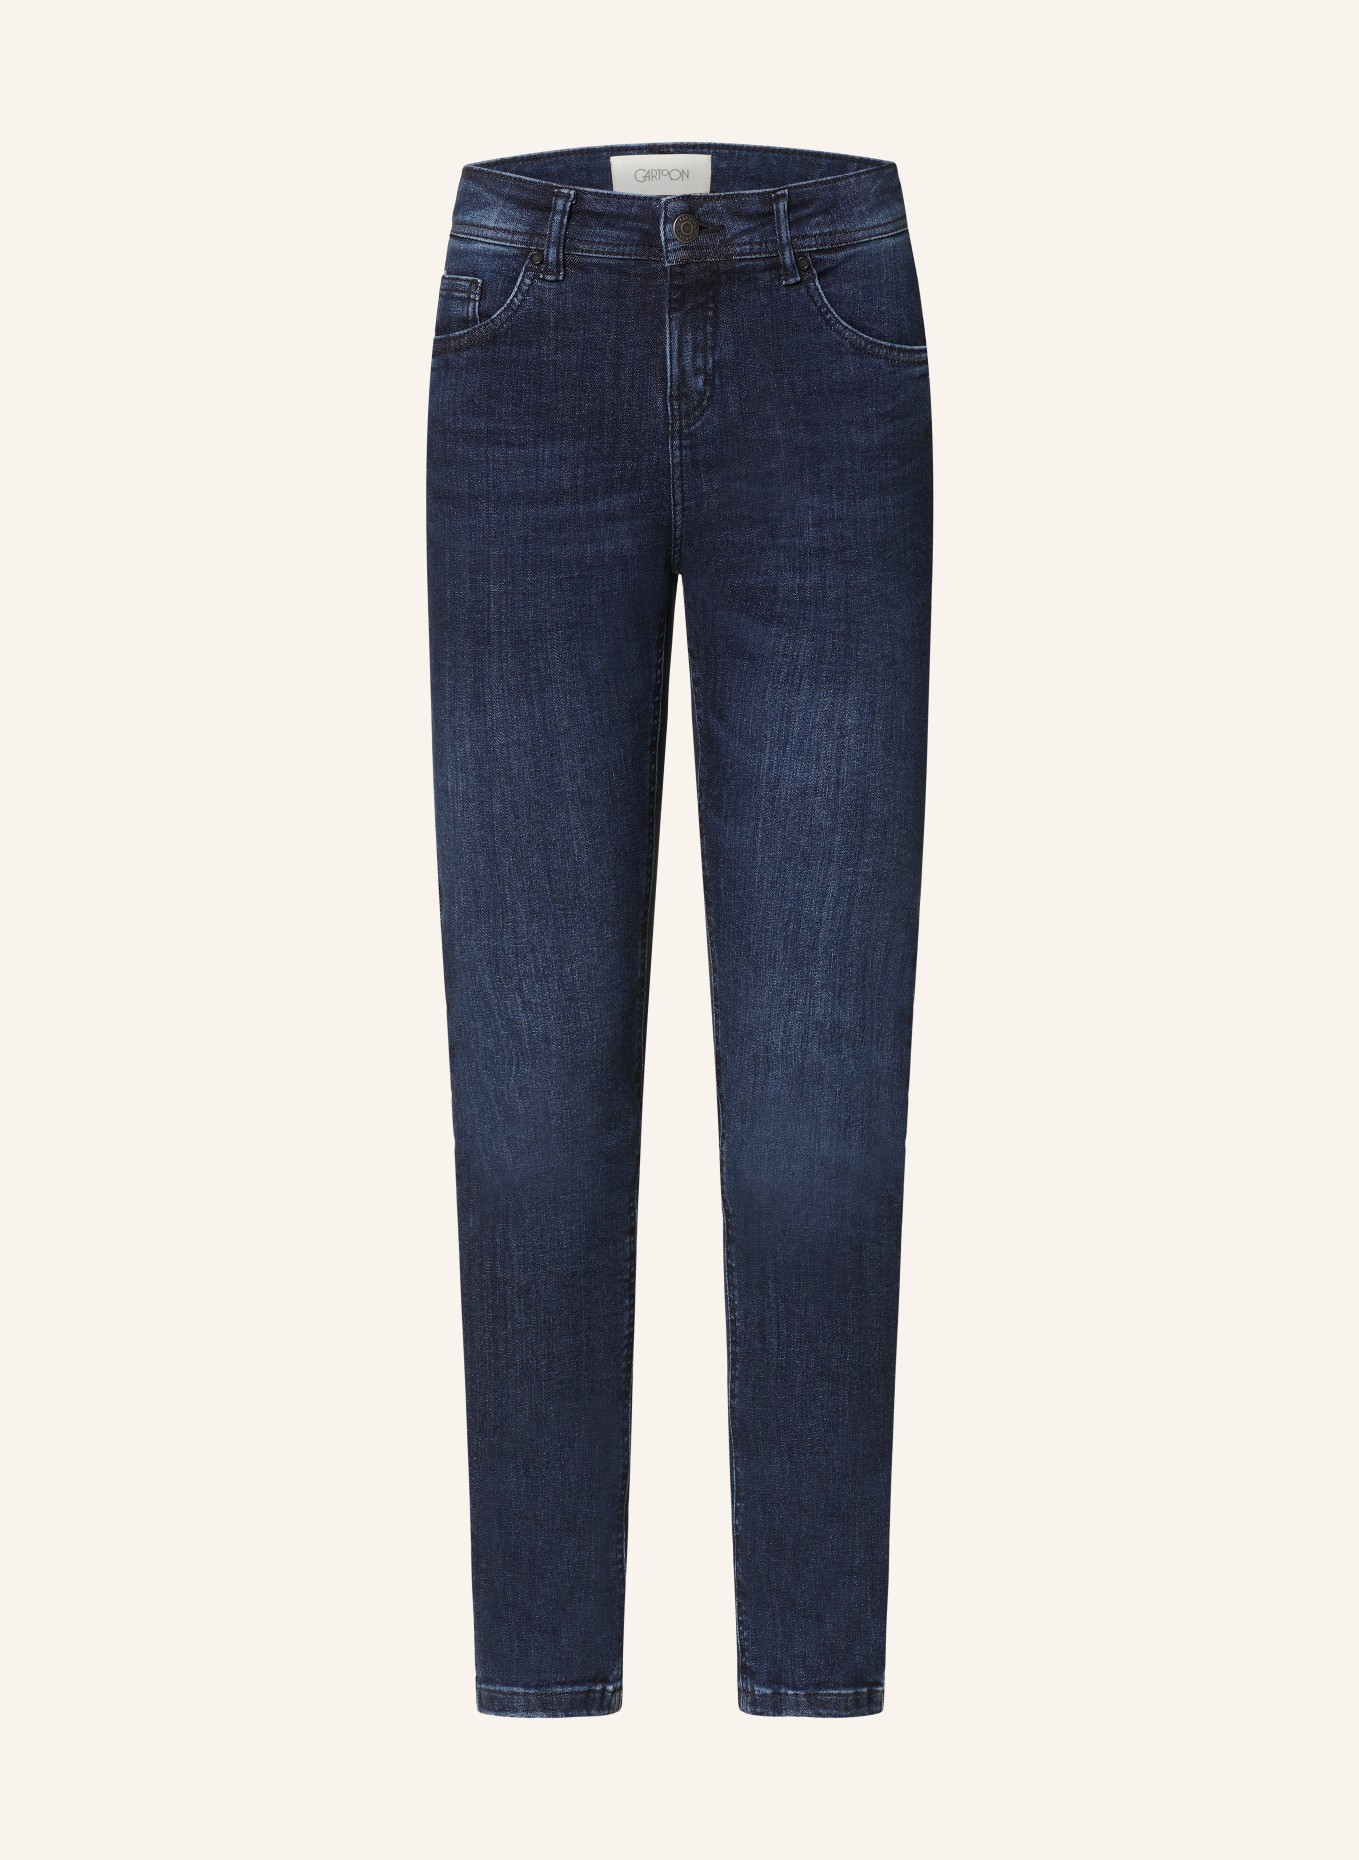 CARTOON Jeans, Farbe: 8620 DARK BLUE DENIM (Bild 1)